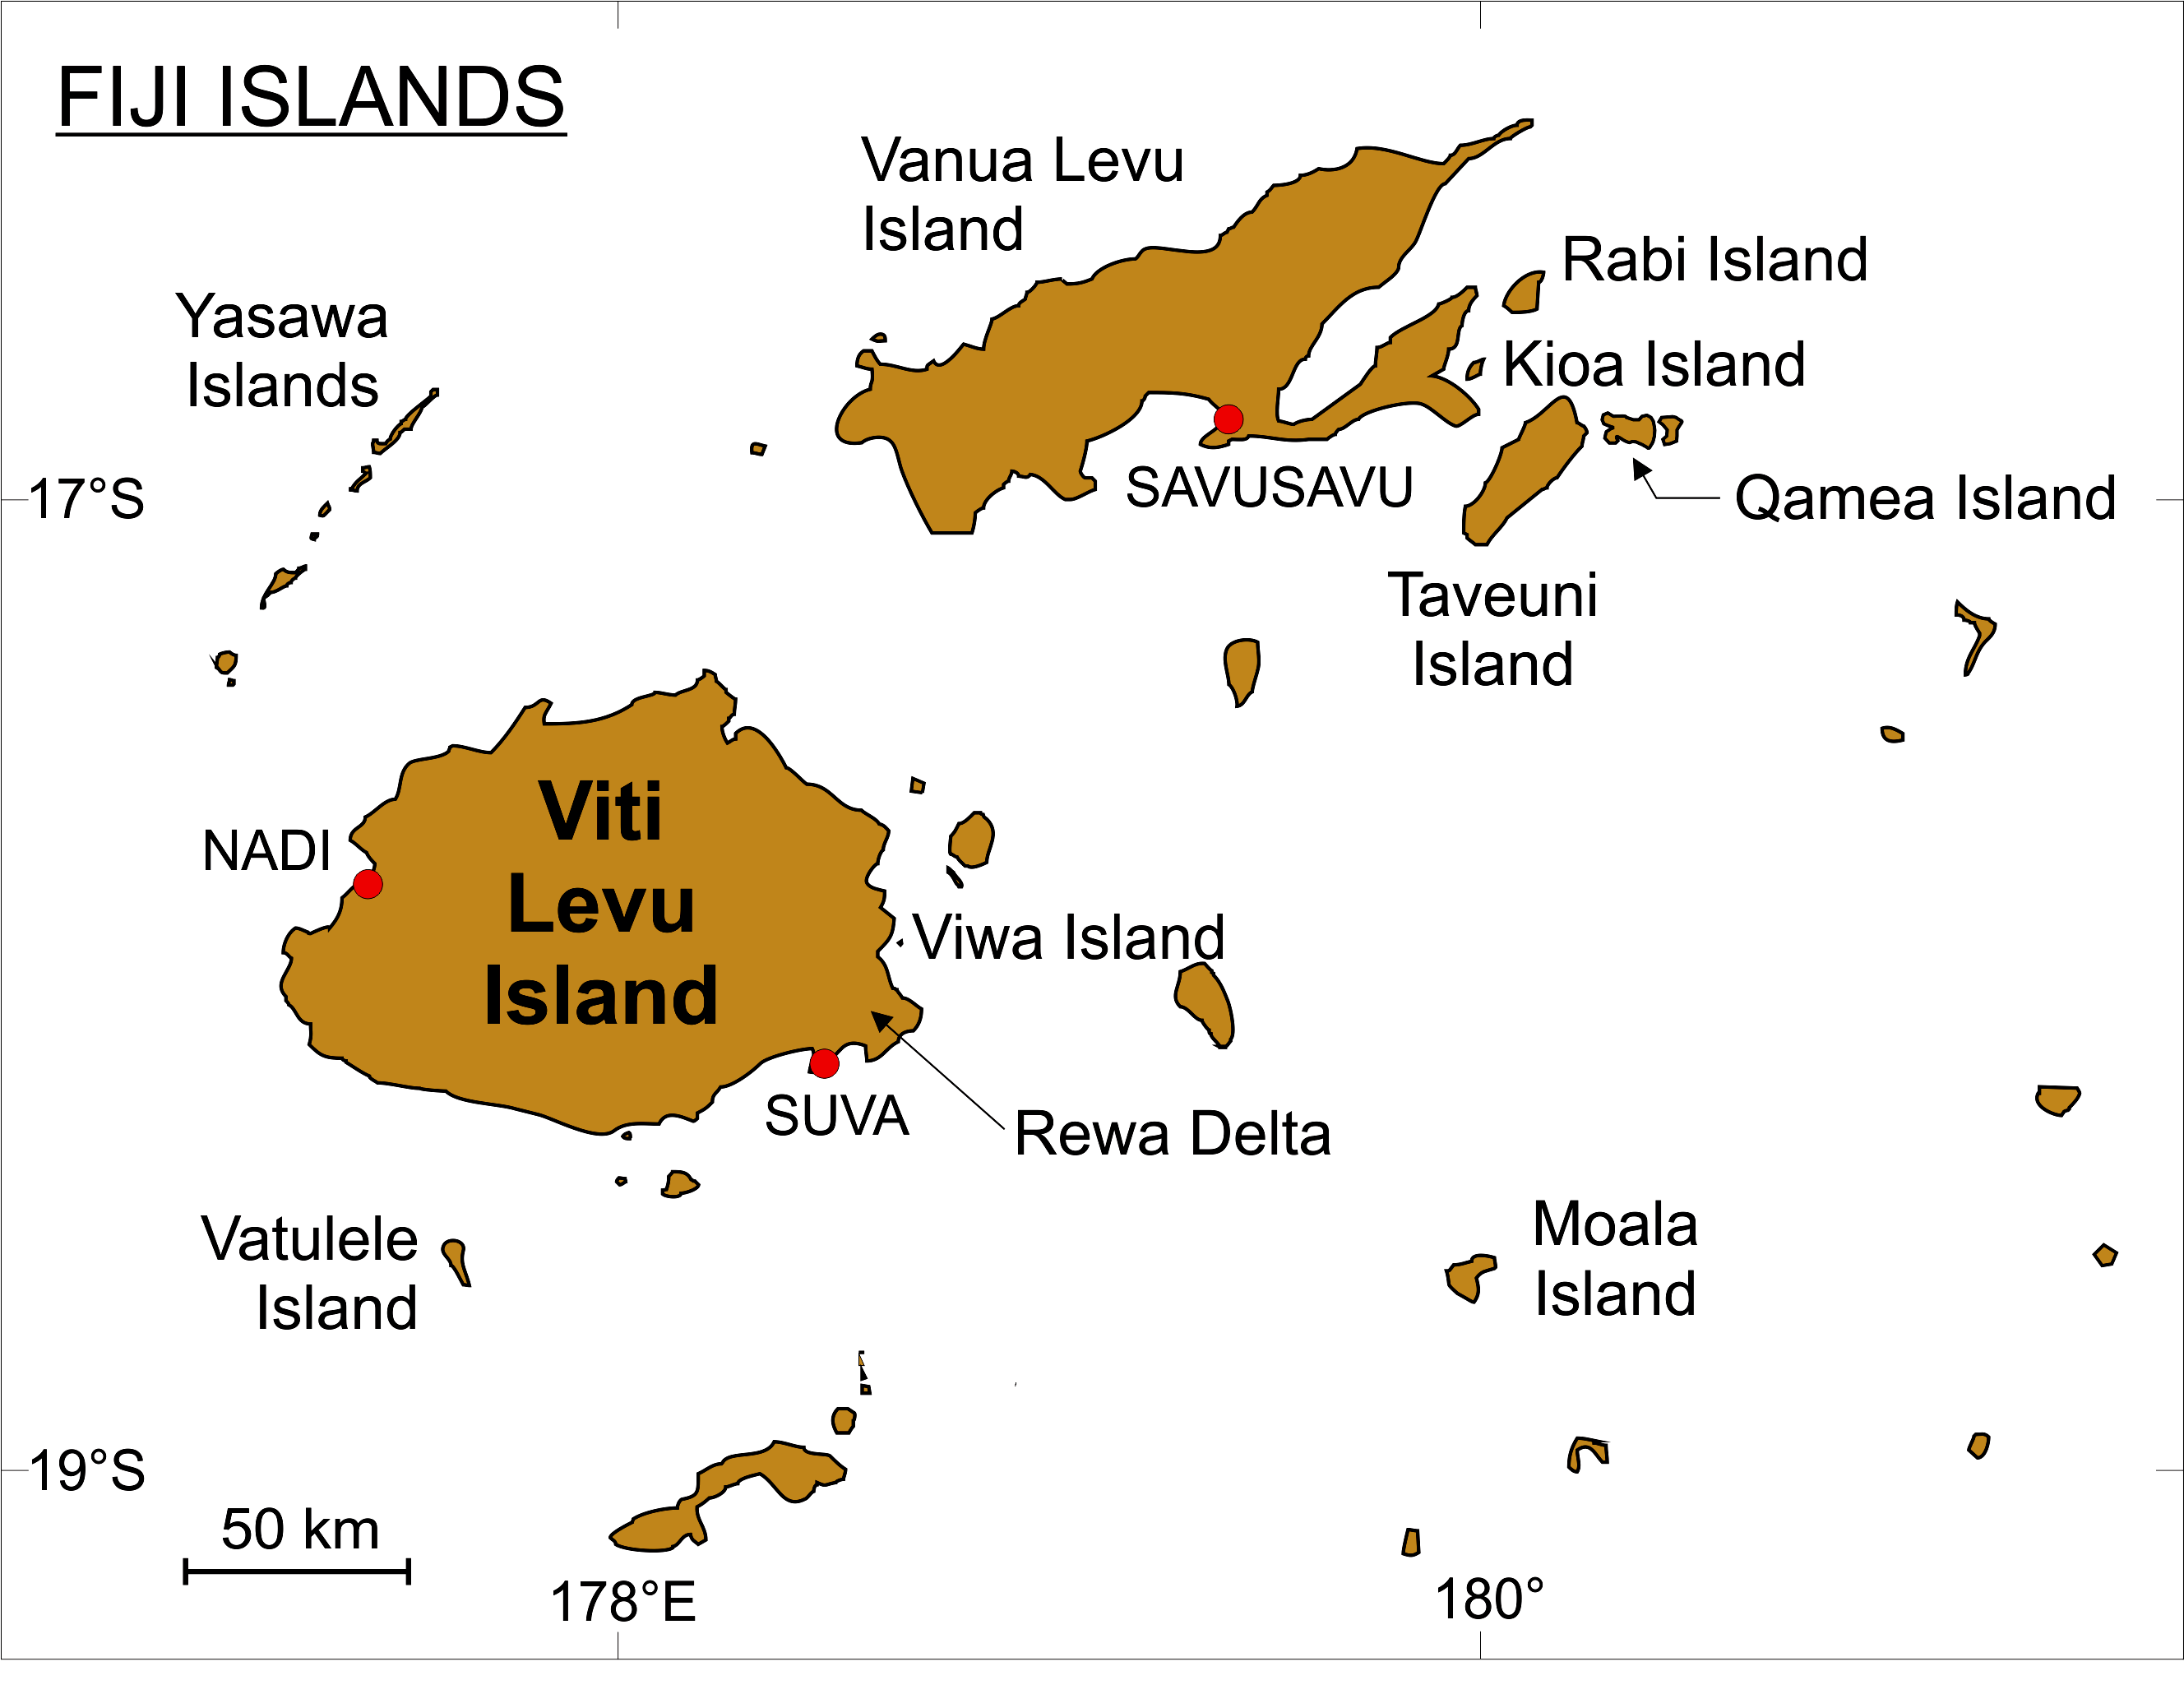 The map of Fiji islands